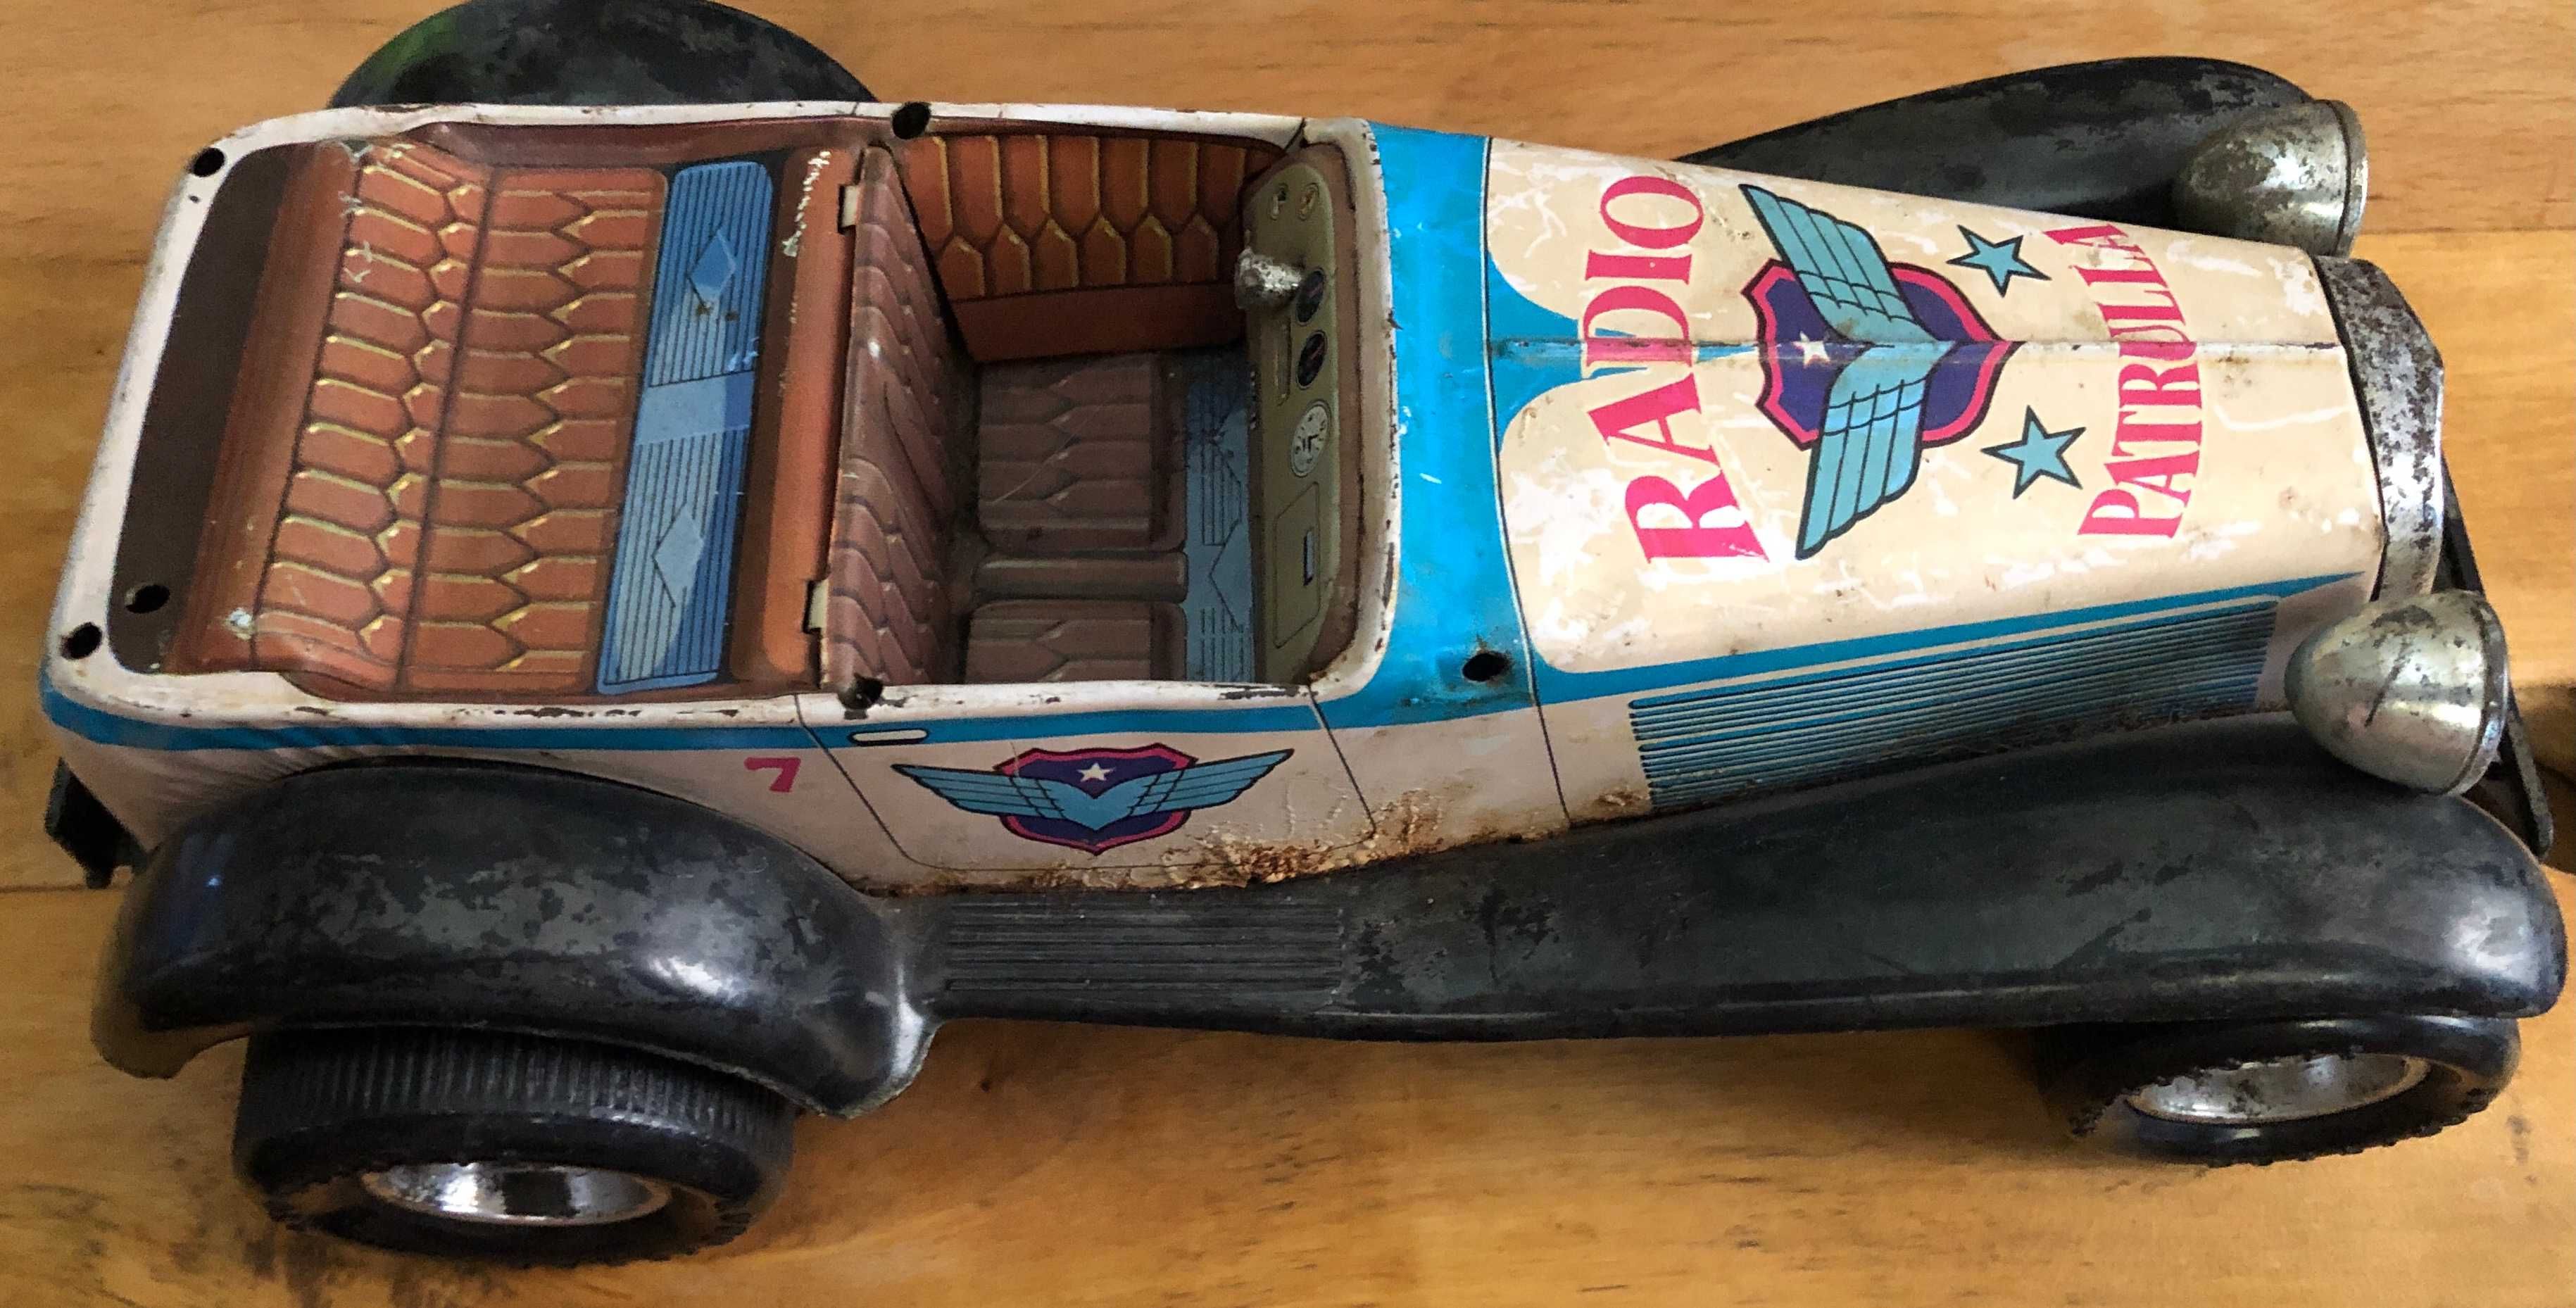 Retro stara zabawka blaszany samochodzik Radio Petrulla firmy Roman